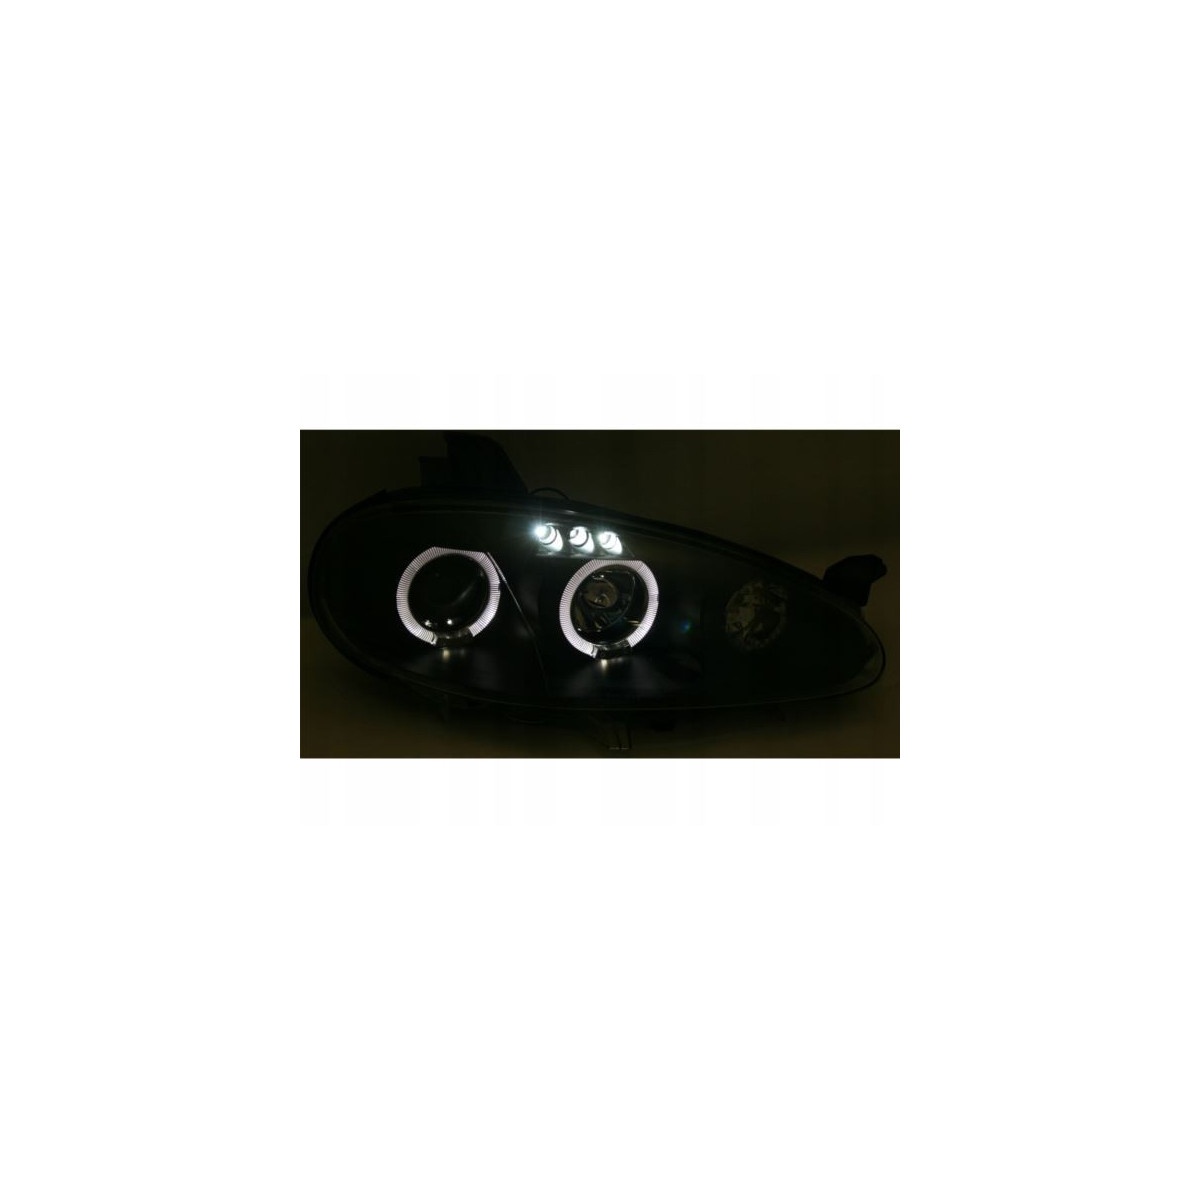 LAMPY PRZEDNIE BLACK RINGI do MAZDA MX5 01-05